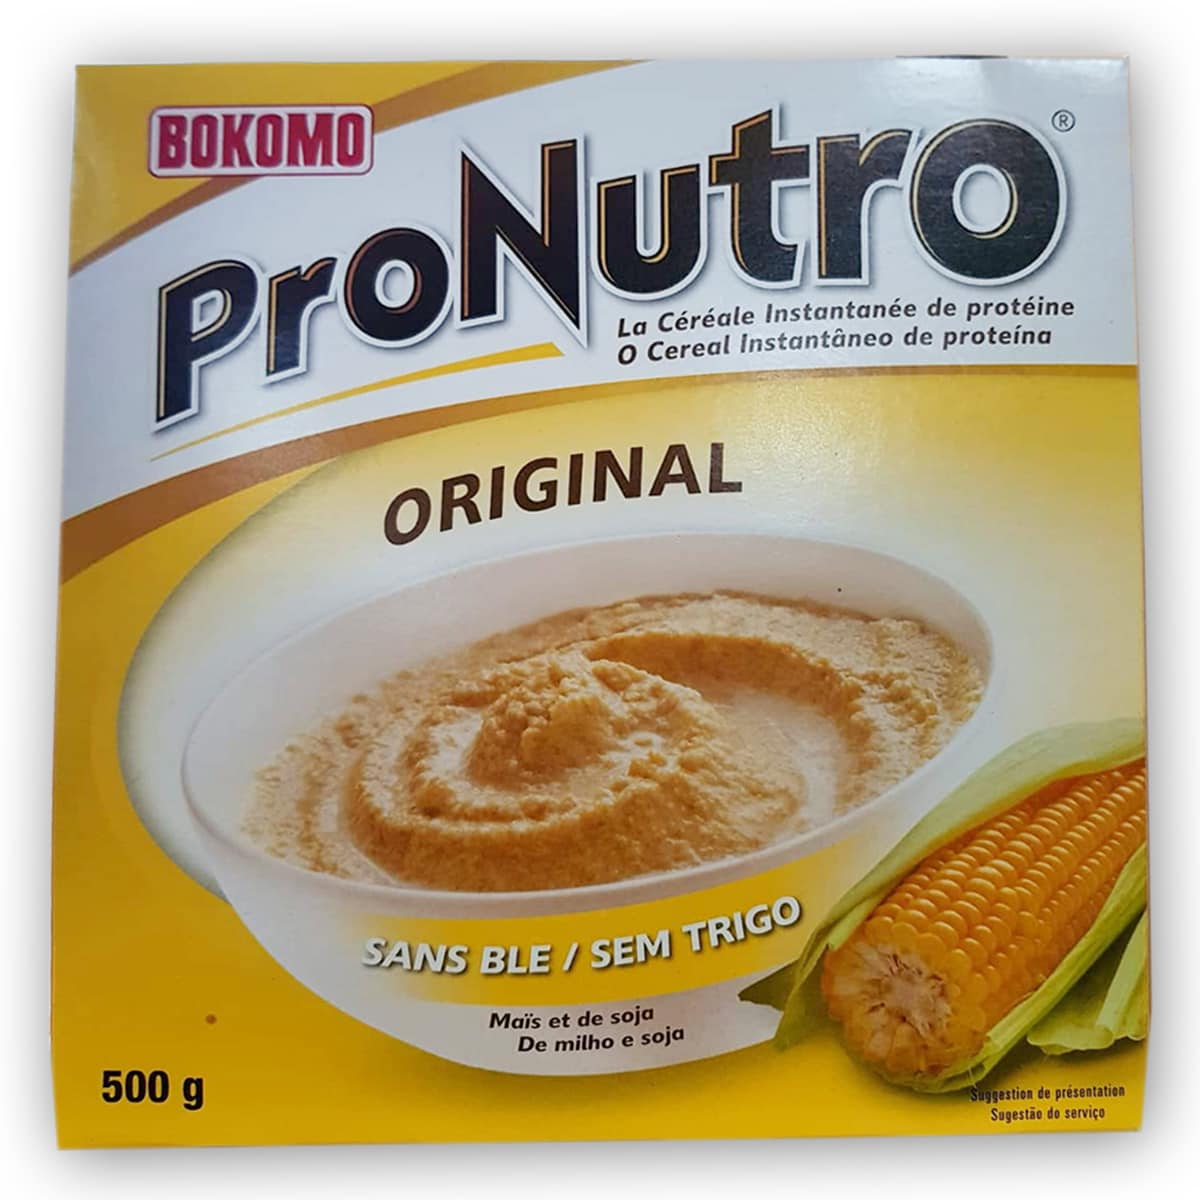 Buy Bokomo Pronutro Original (Wheat-free) - 500 gm